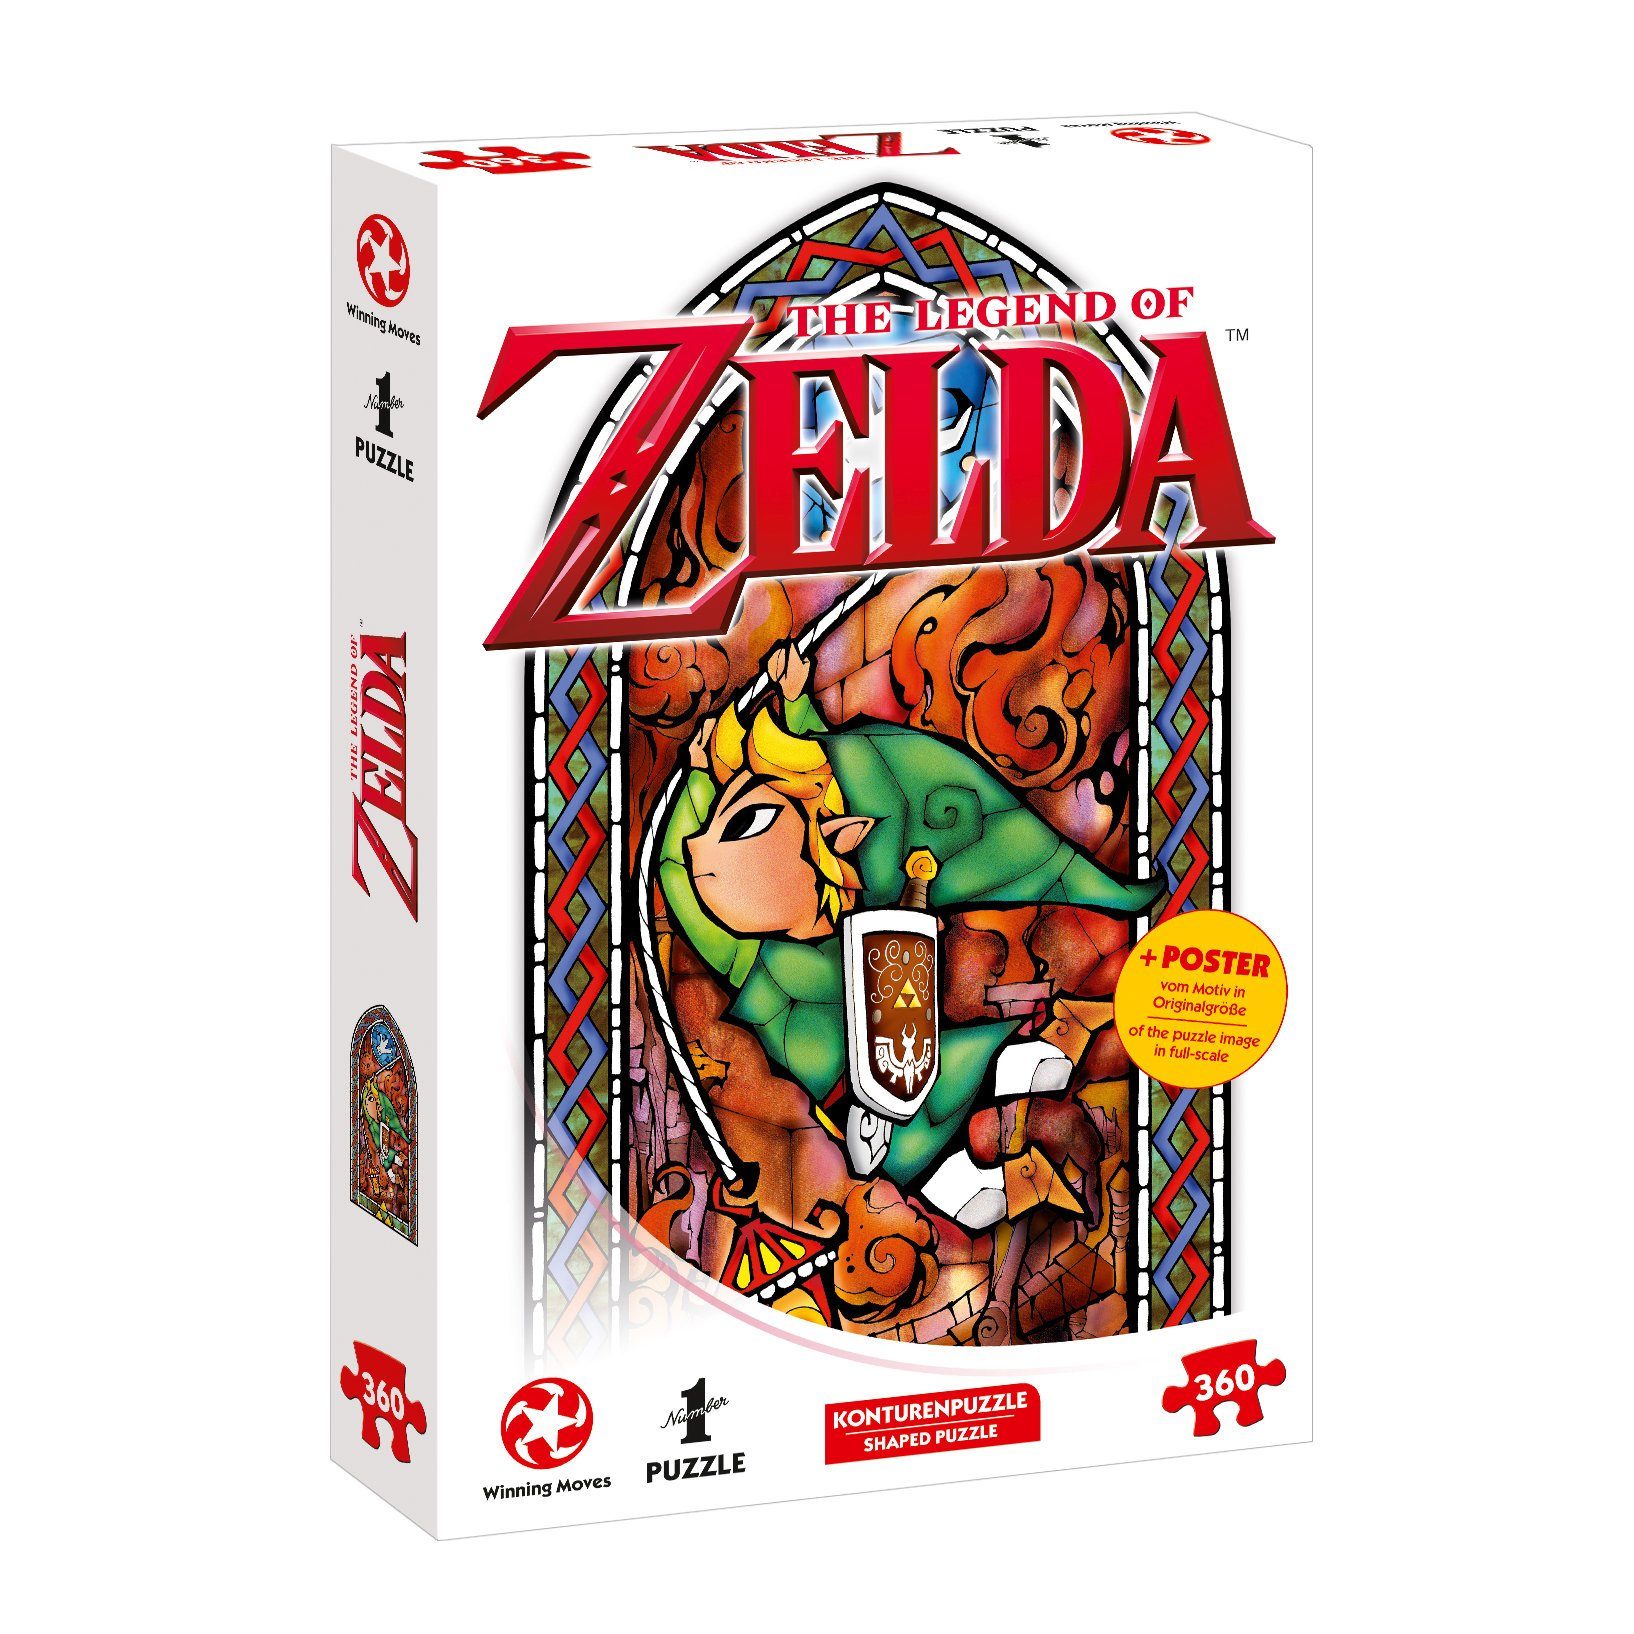 360 Puzzle Teile, Zelda Puzzle Puzzleteile Moves Winning 360 Link-Adventurer